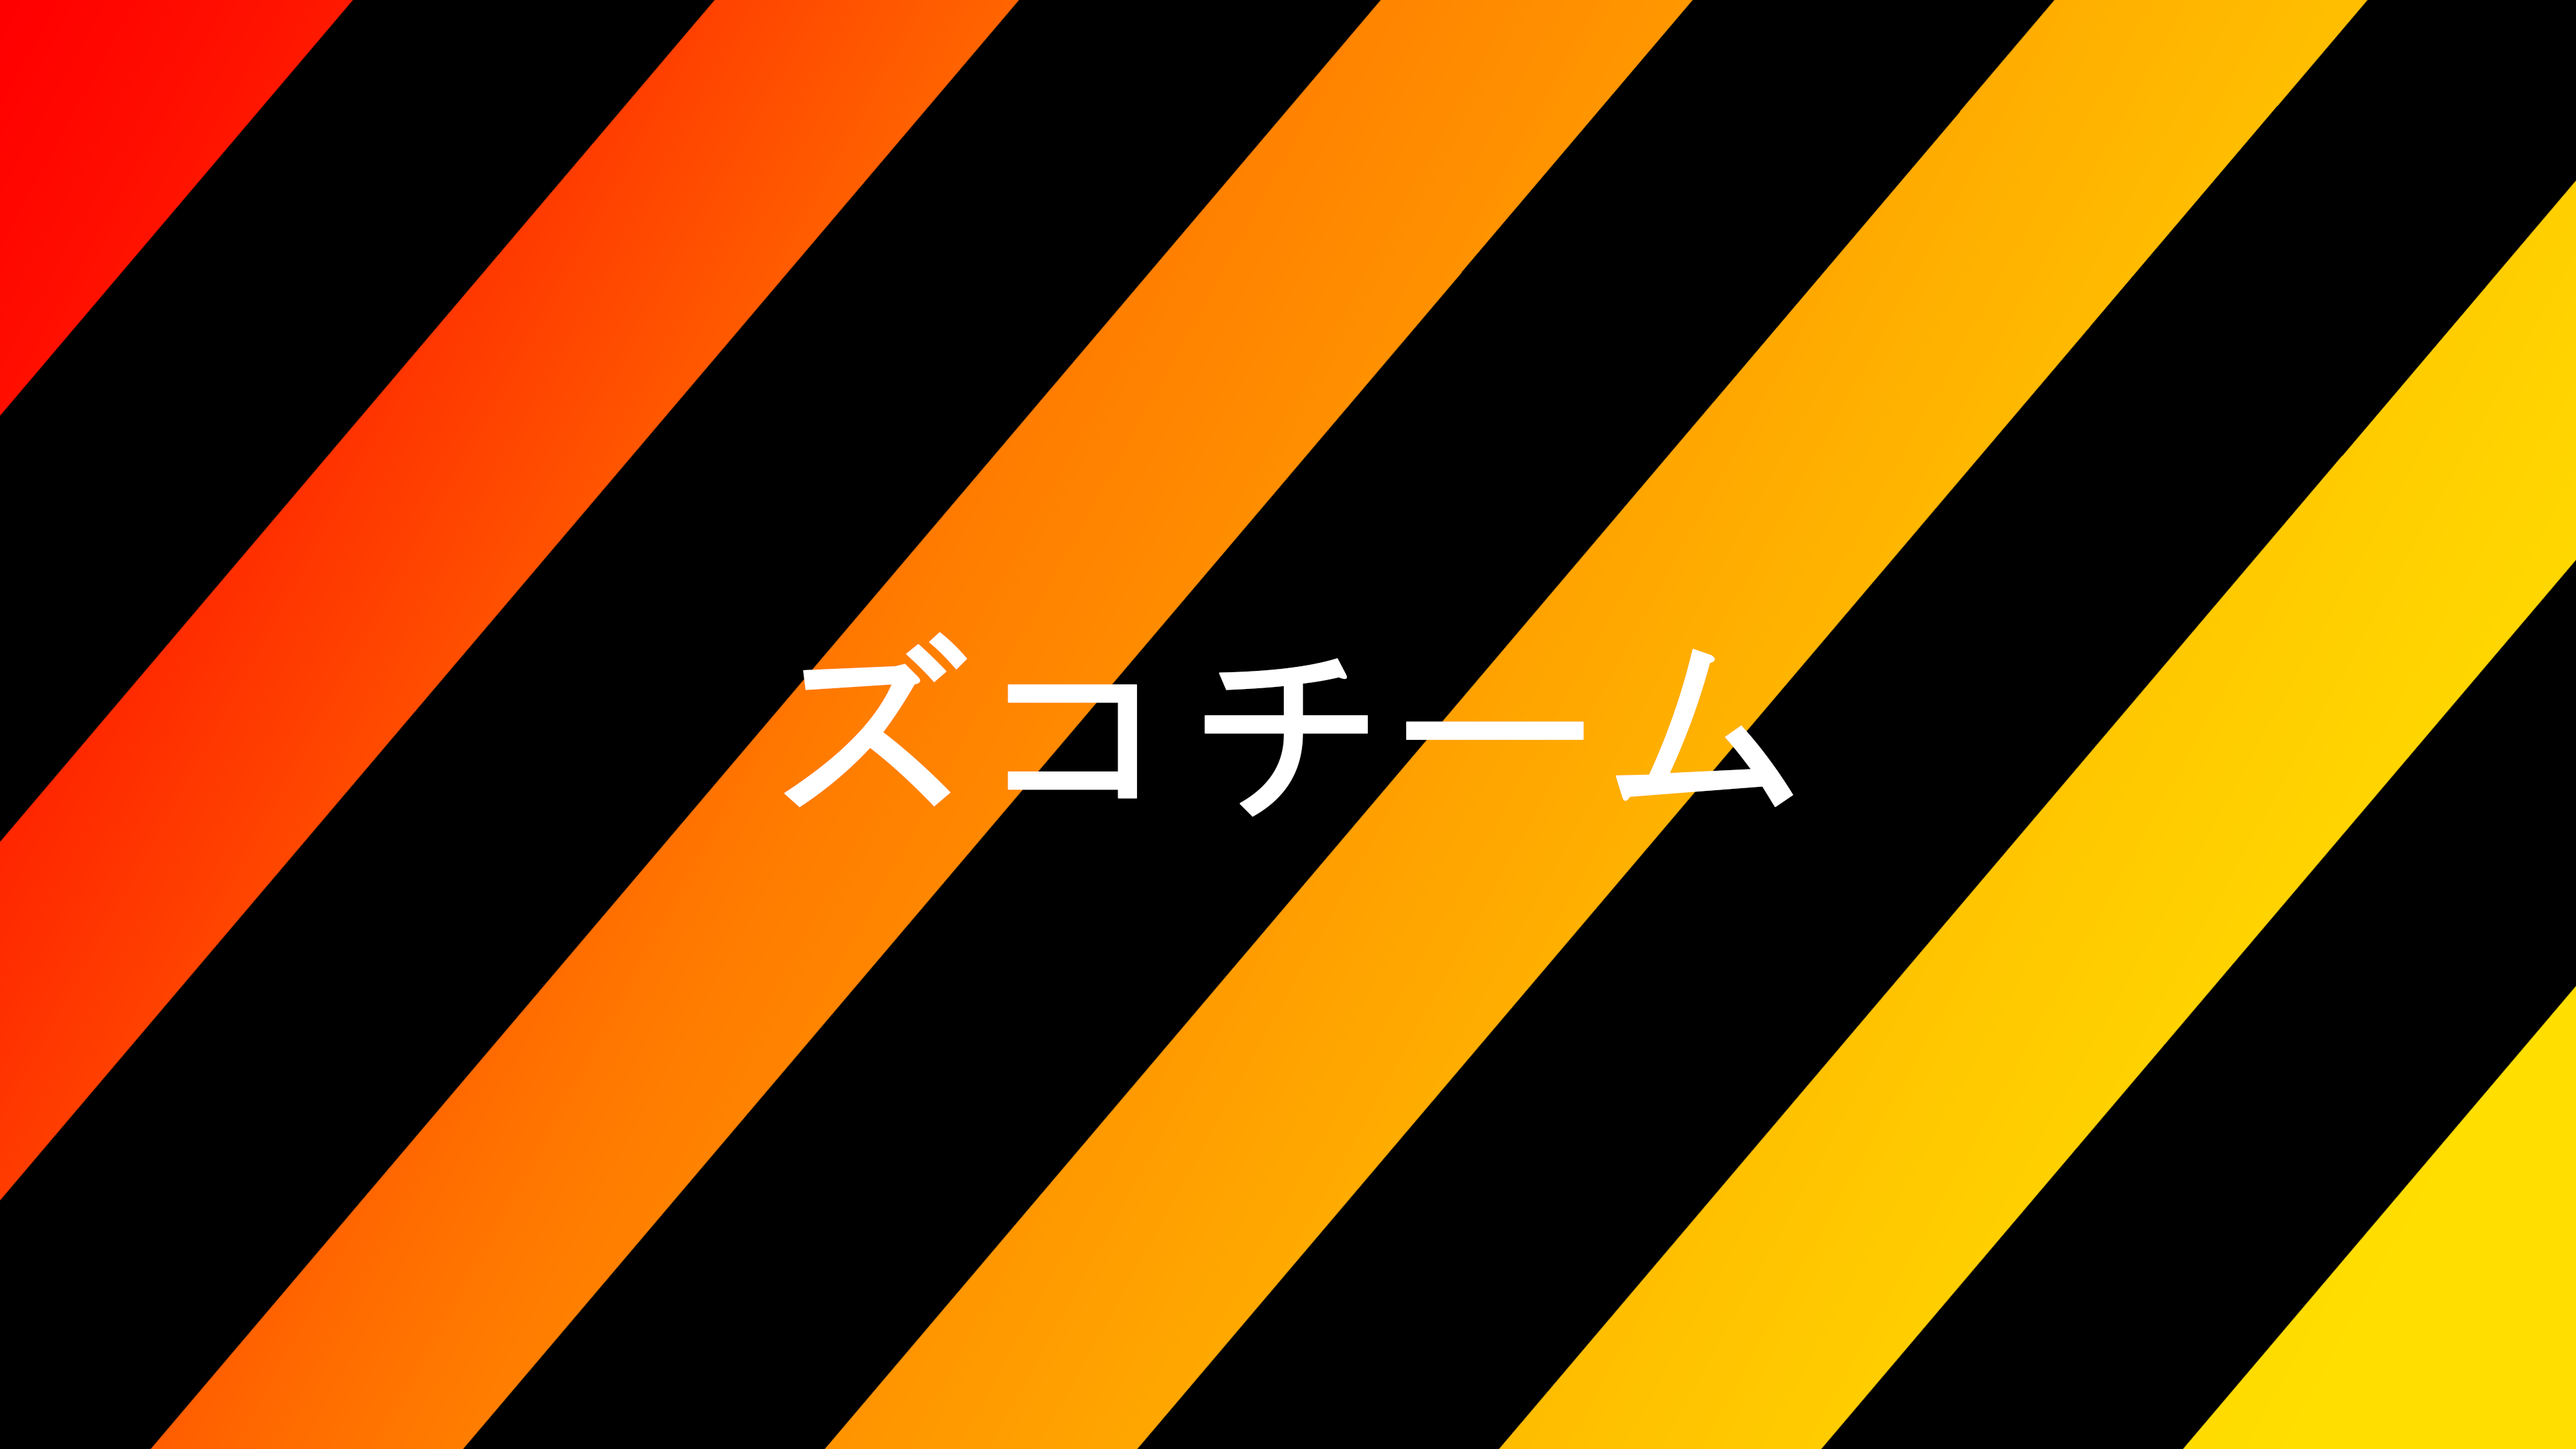 Wallpaper, black, 4k, Japan, yellow, red, orange, zuko team, zuko gang, zuko esports 3840x2160